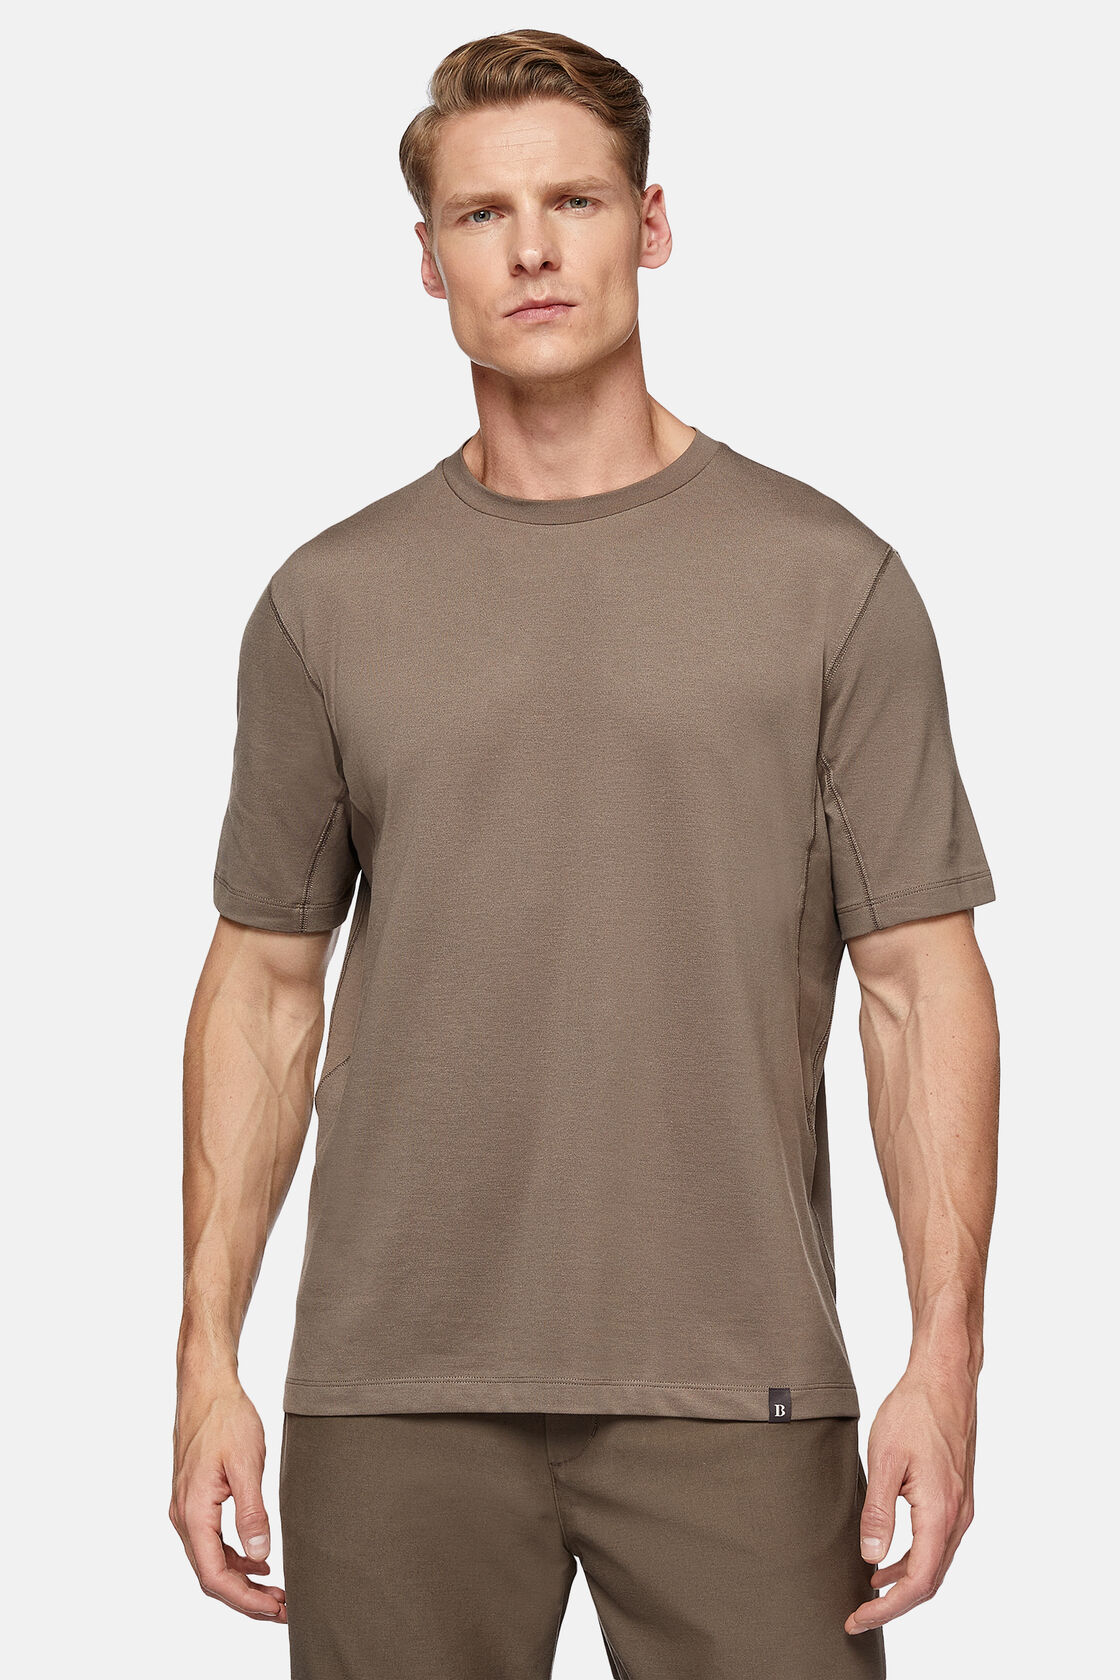 Hochwertiges Piqué-T-Shirt, Braun, hi-res